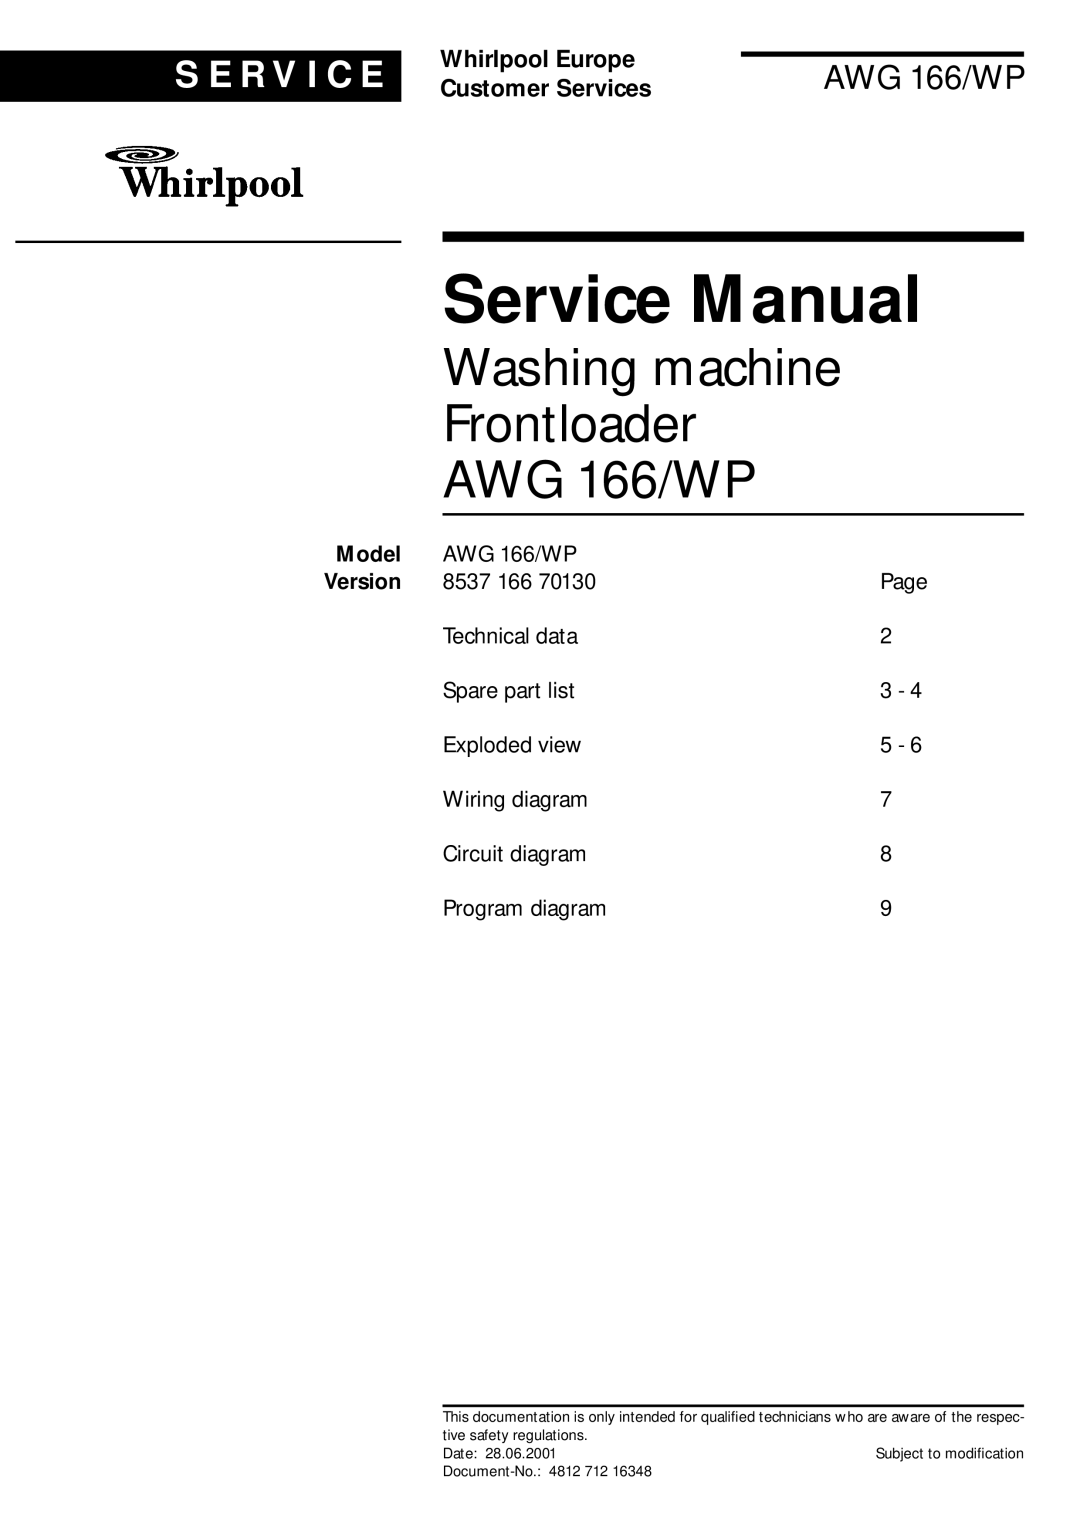 Whirlpool service manual Model, Service Manual, Washing machine Frontloader AWG 166/WP, S E R V I C E, Whirlpool Europe 